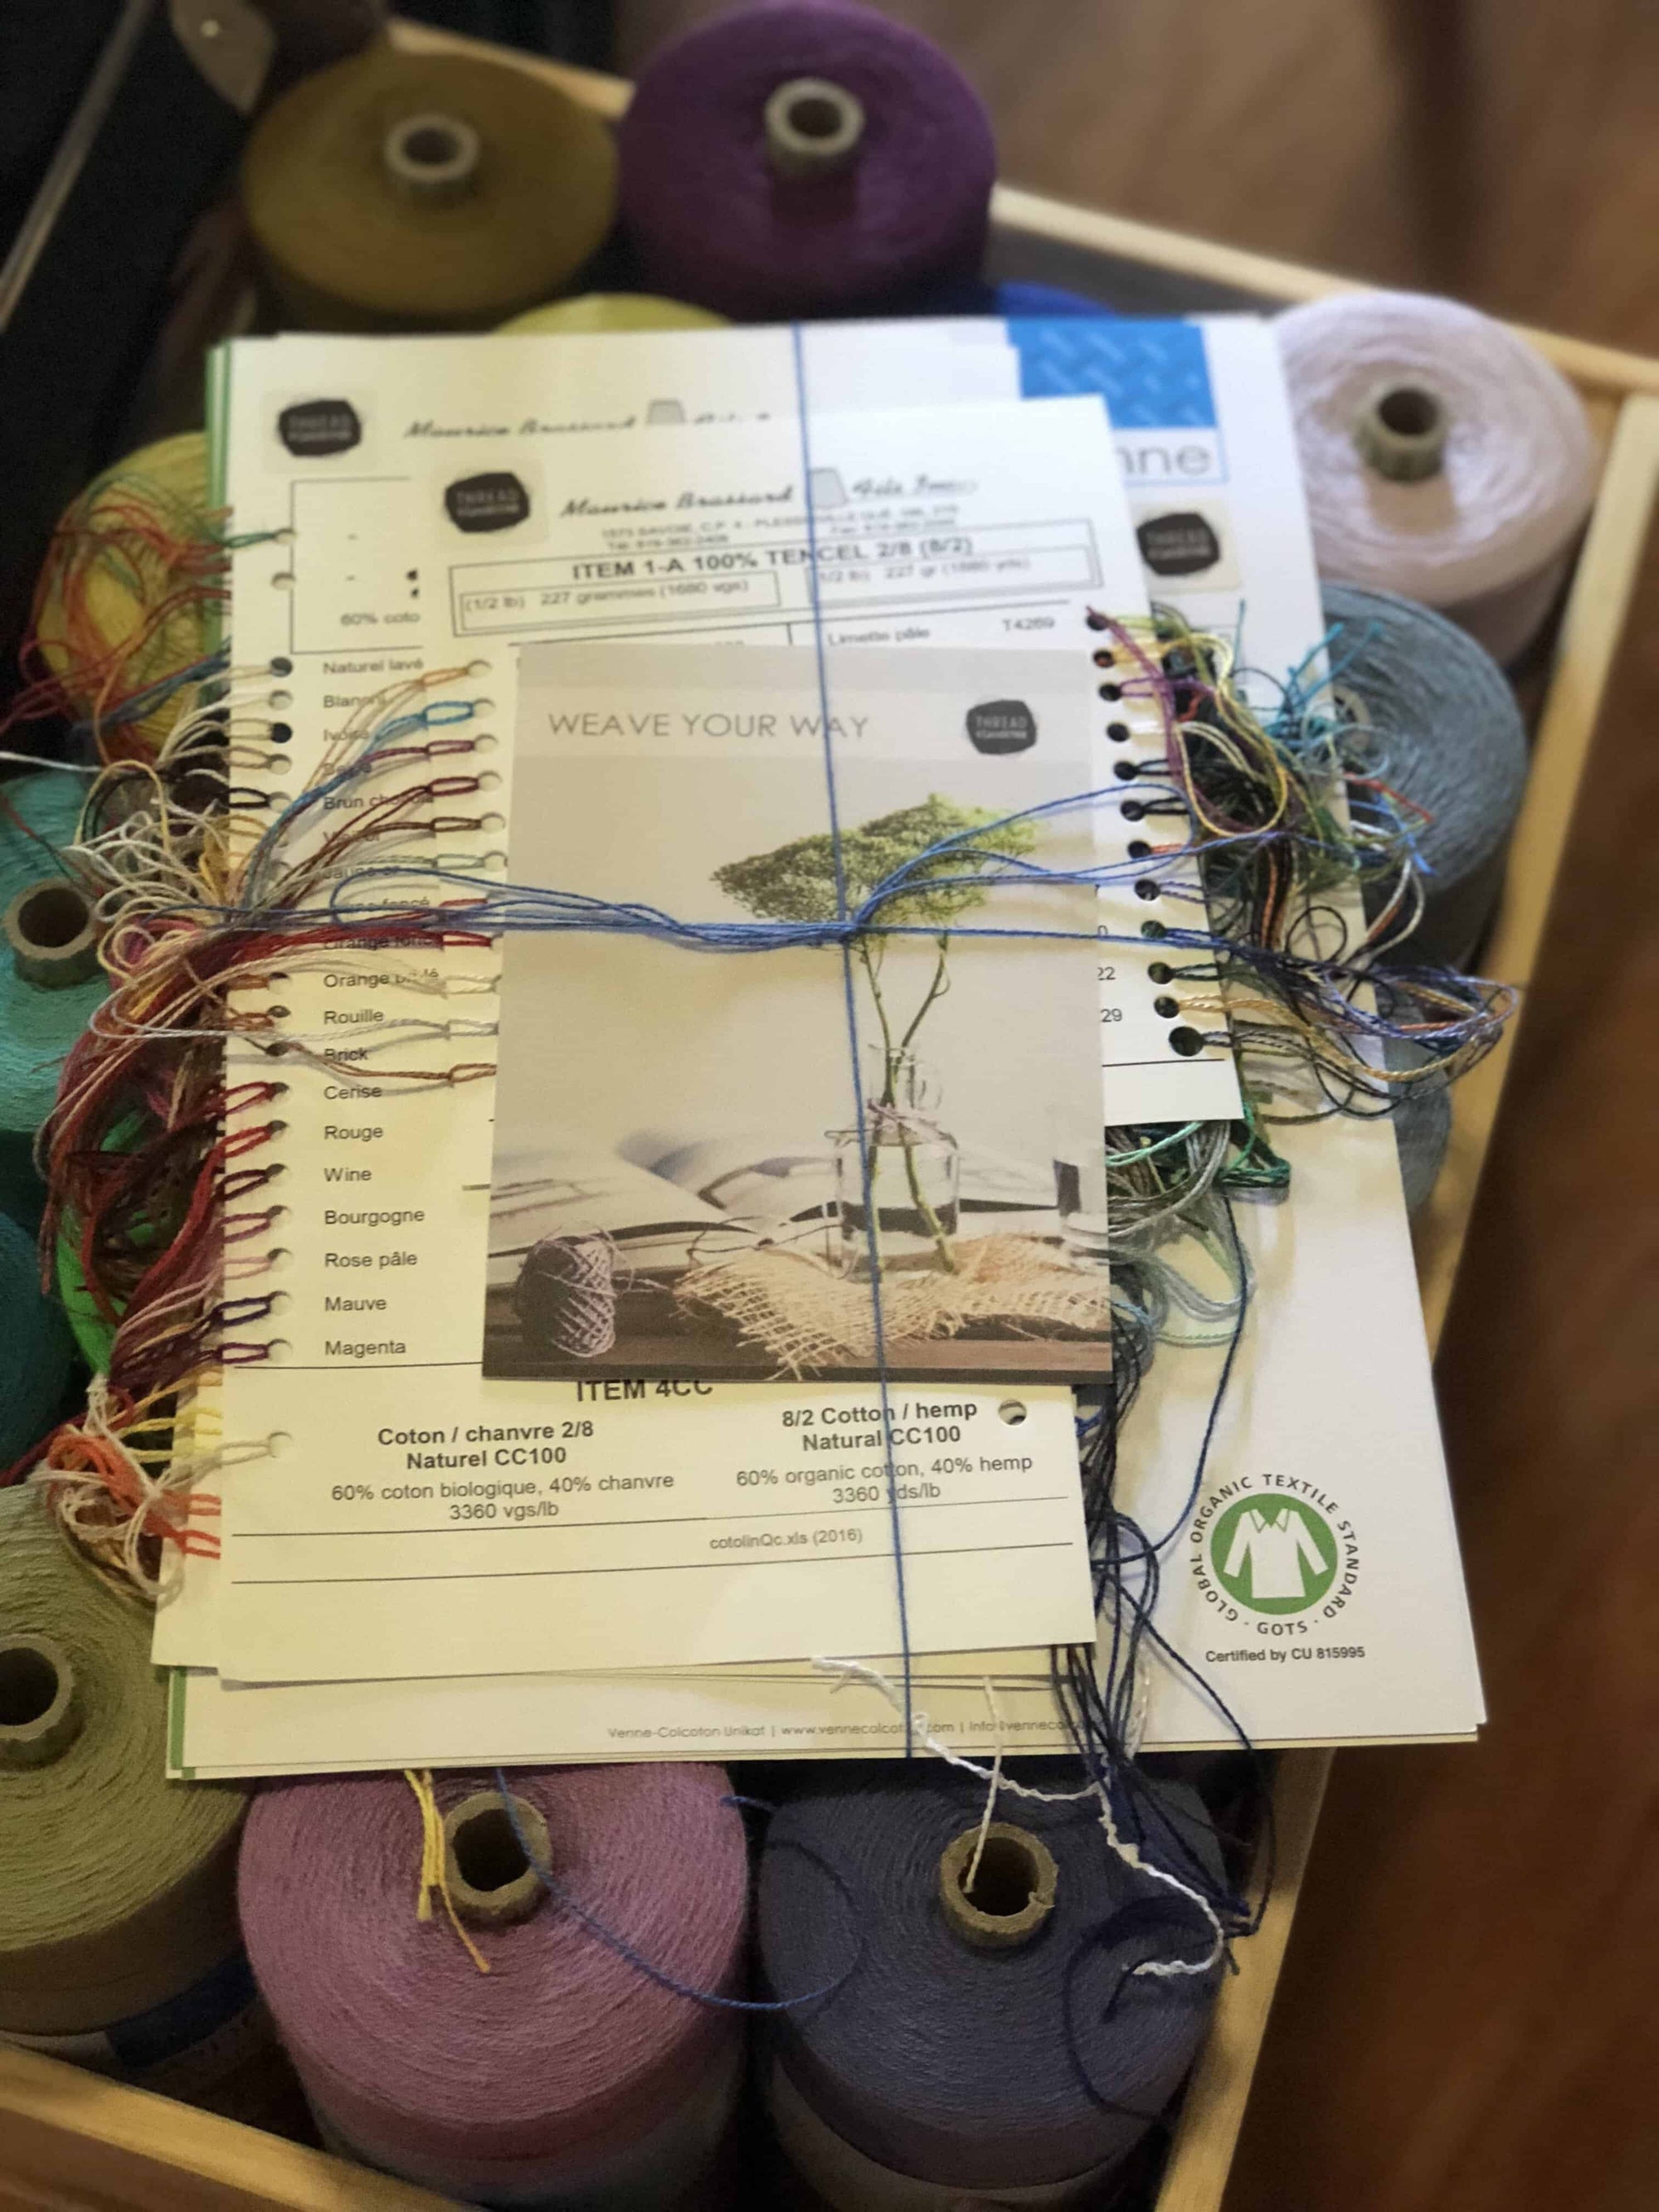 Venne-16/2-Organic-Cotton-Colour-Card - Thread Collective Australia